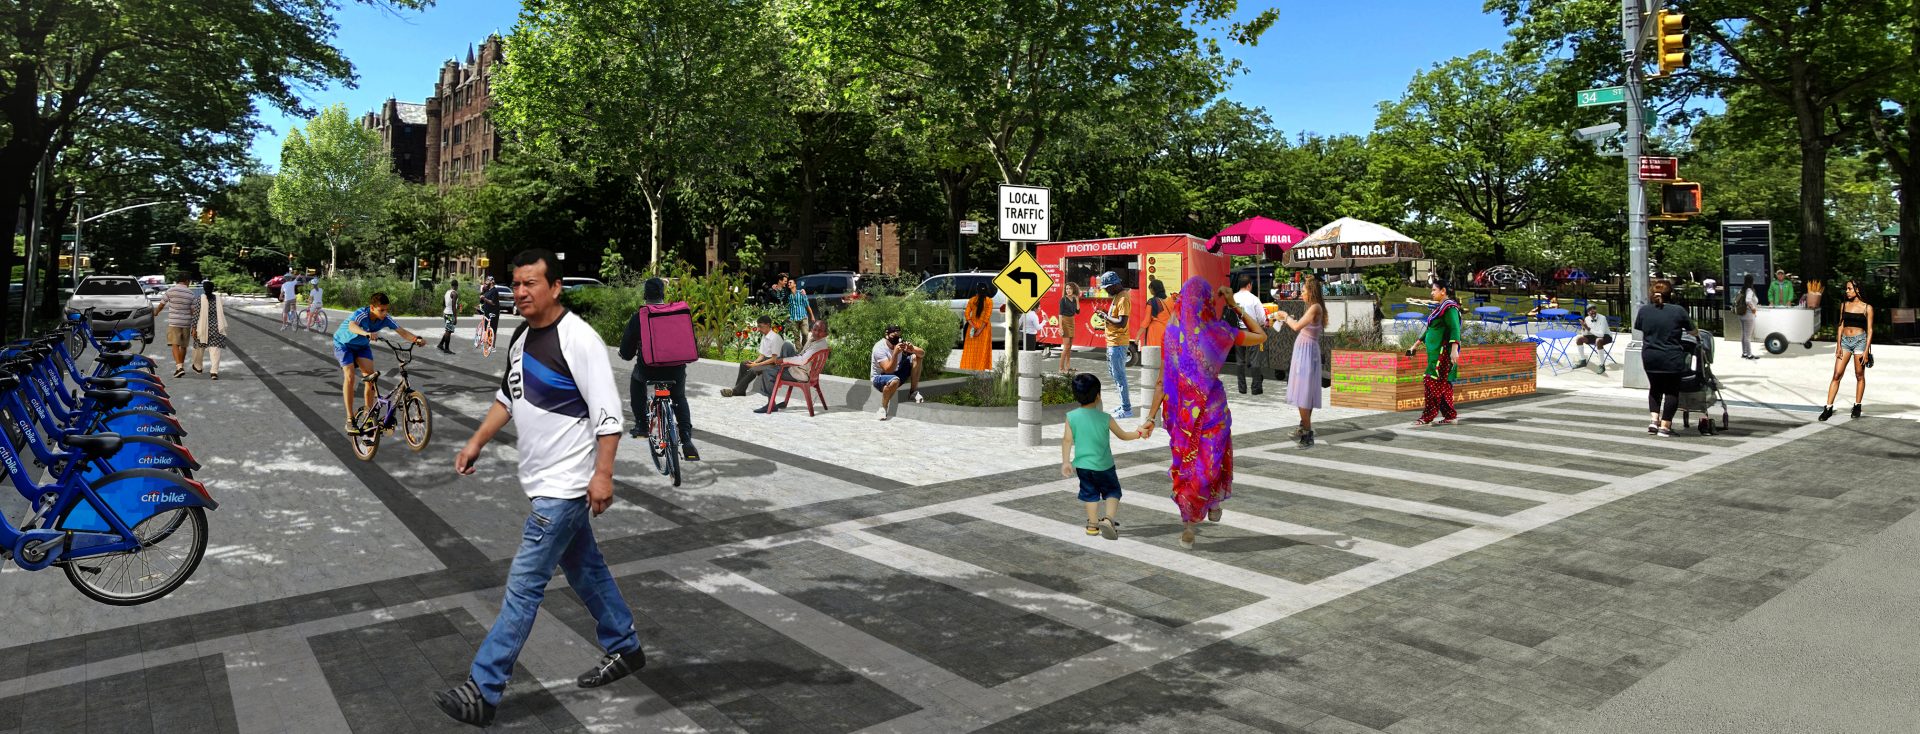 Street Plans Helps Stakeholders Re-Imagine Jay St. in Brooklyn.